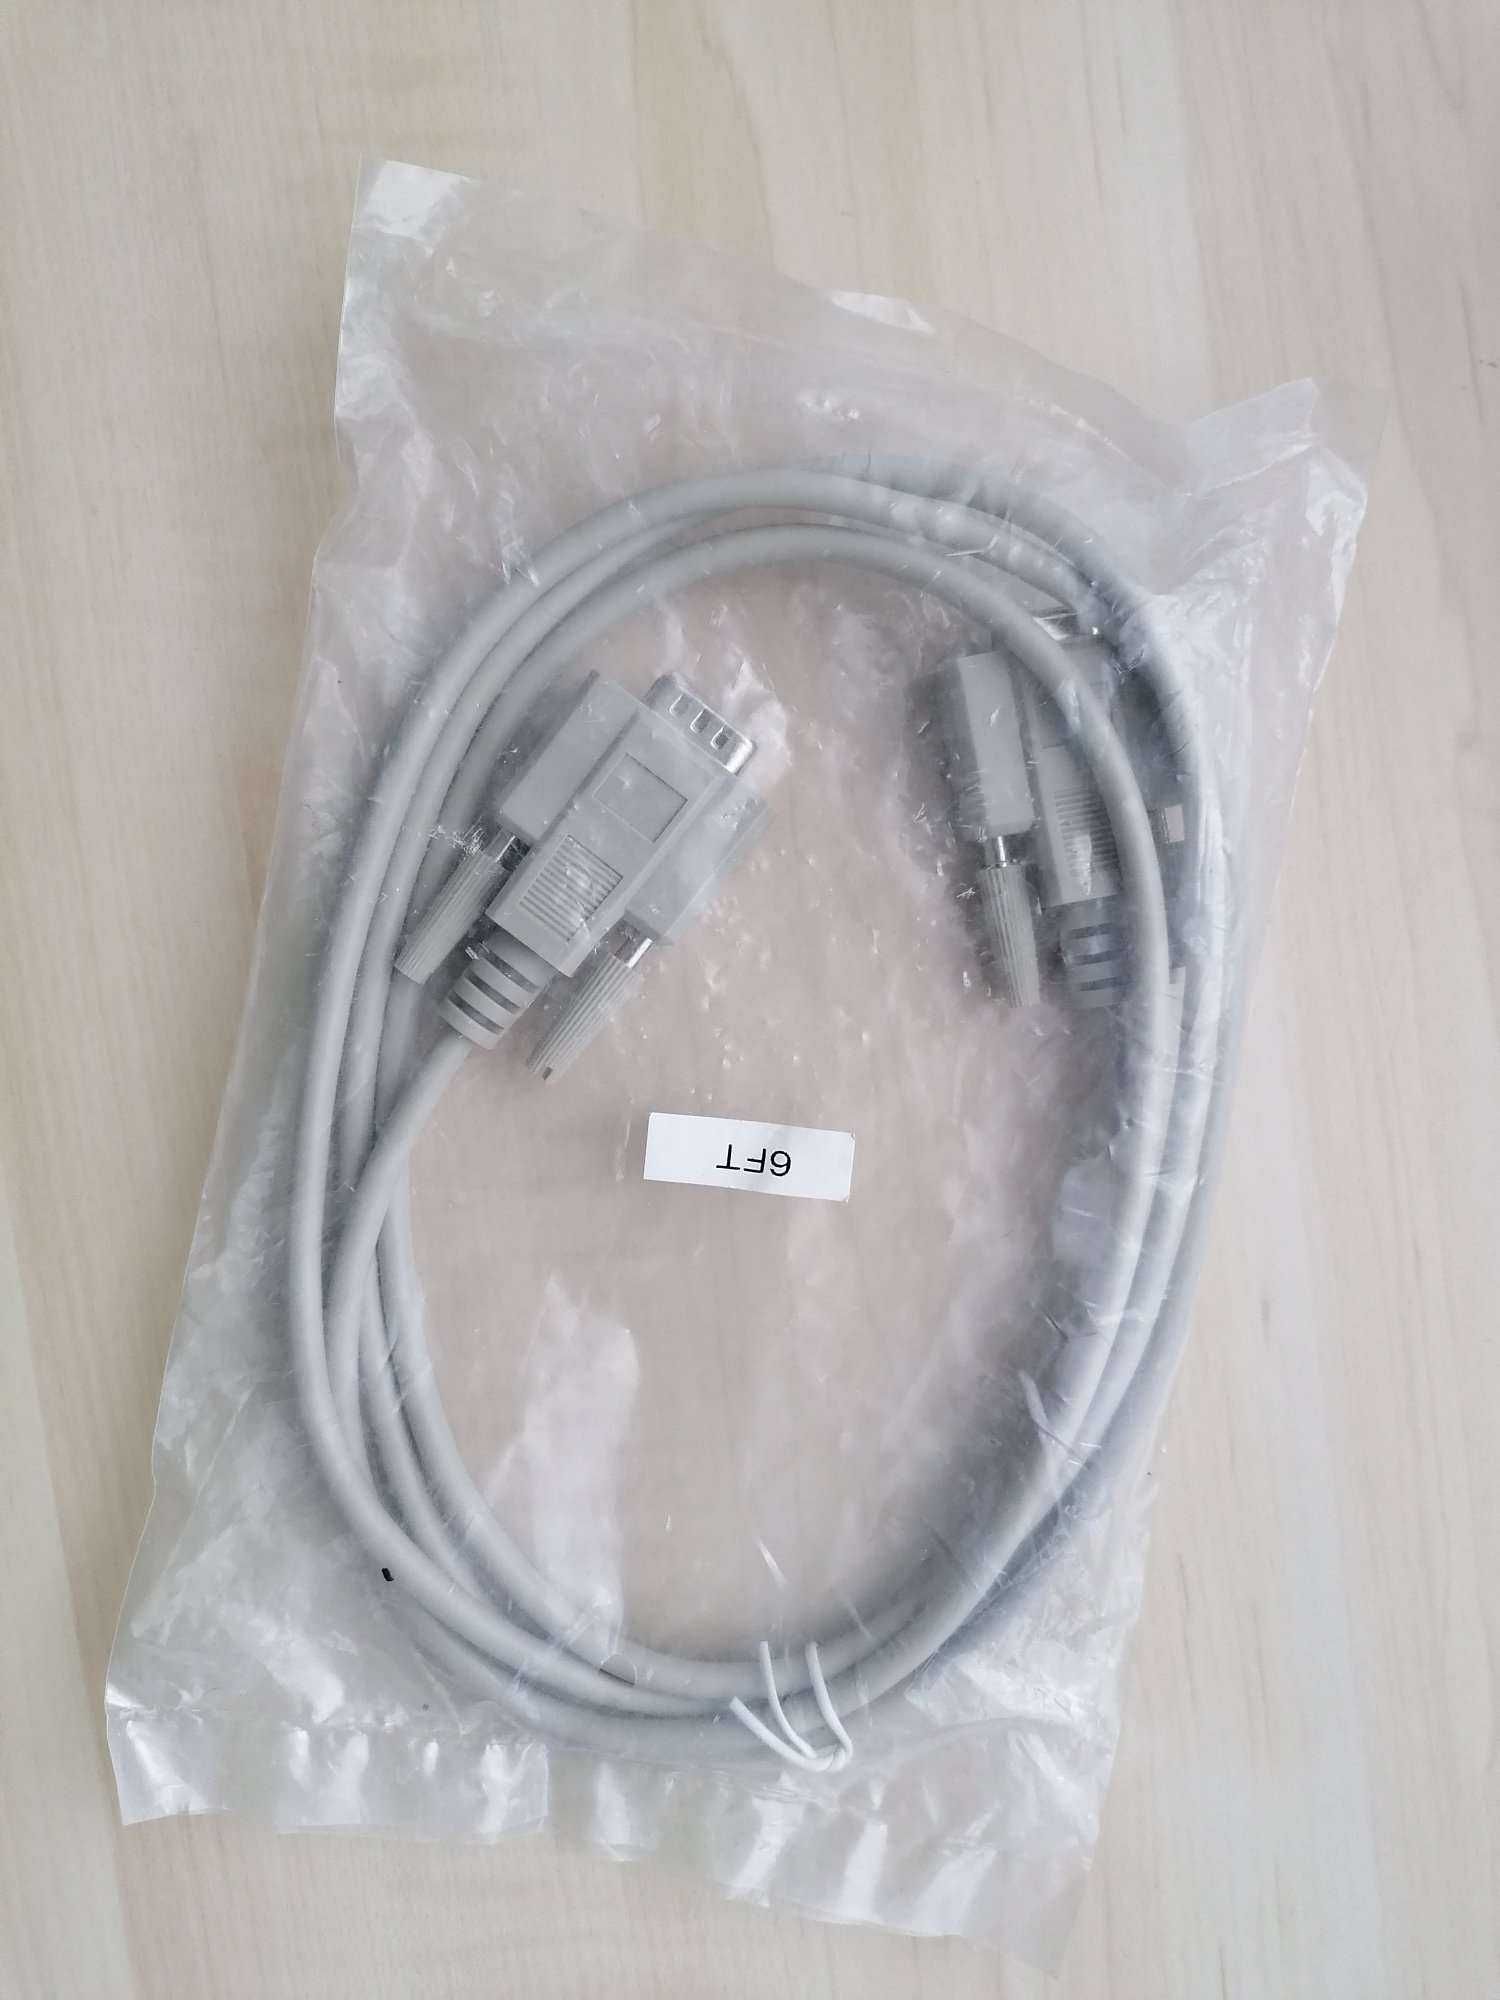 Kabel do monitora (Nowy) 1.8M